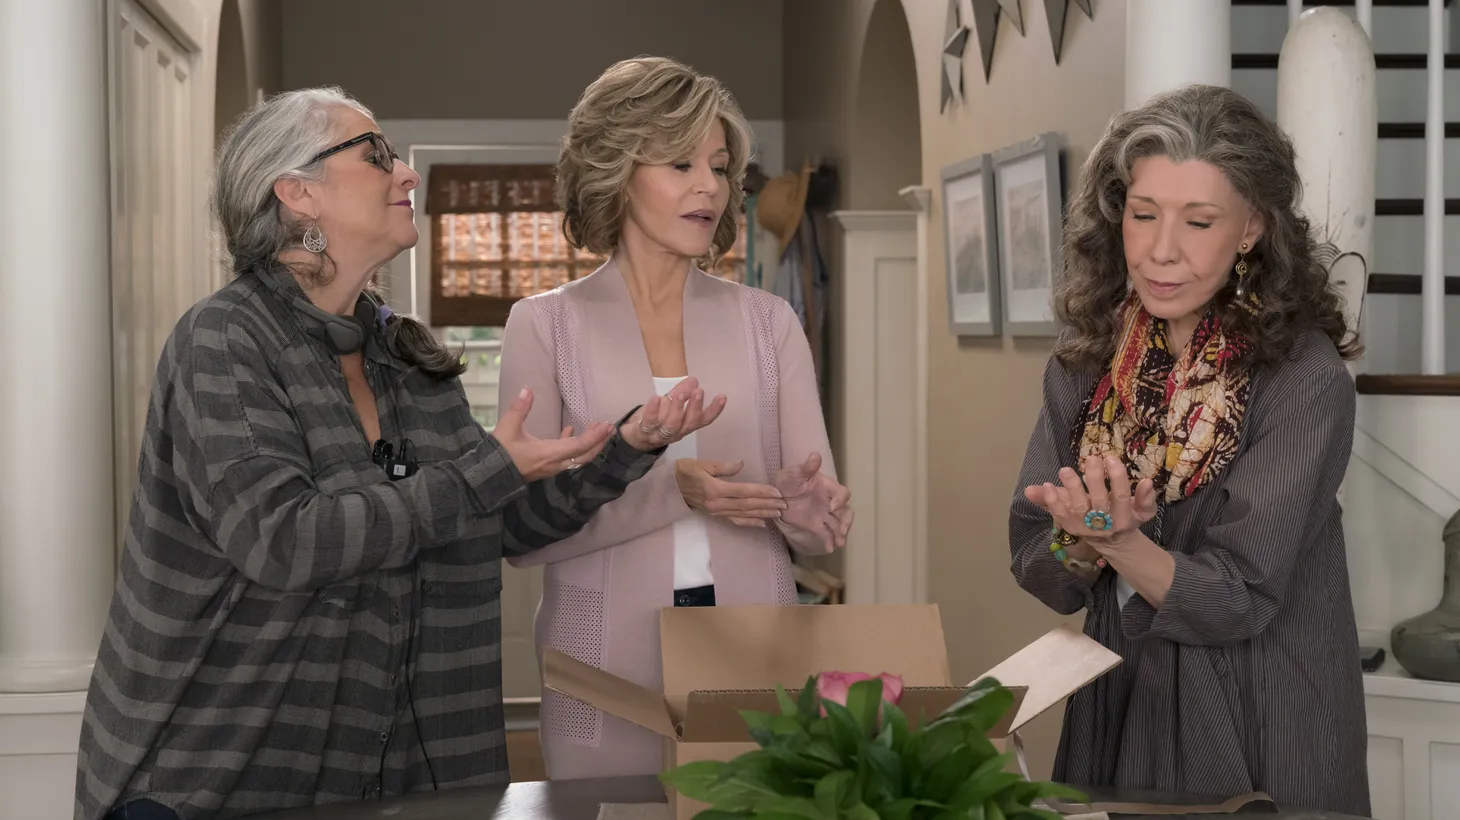 Showrunner Marta Kauffmann talks to actors Lily Tomlin and Jane Fonda on the set of Netflix’s “Grace and Frankie.”